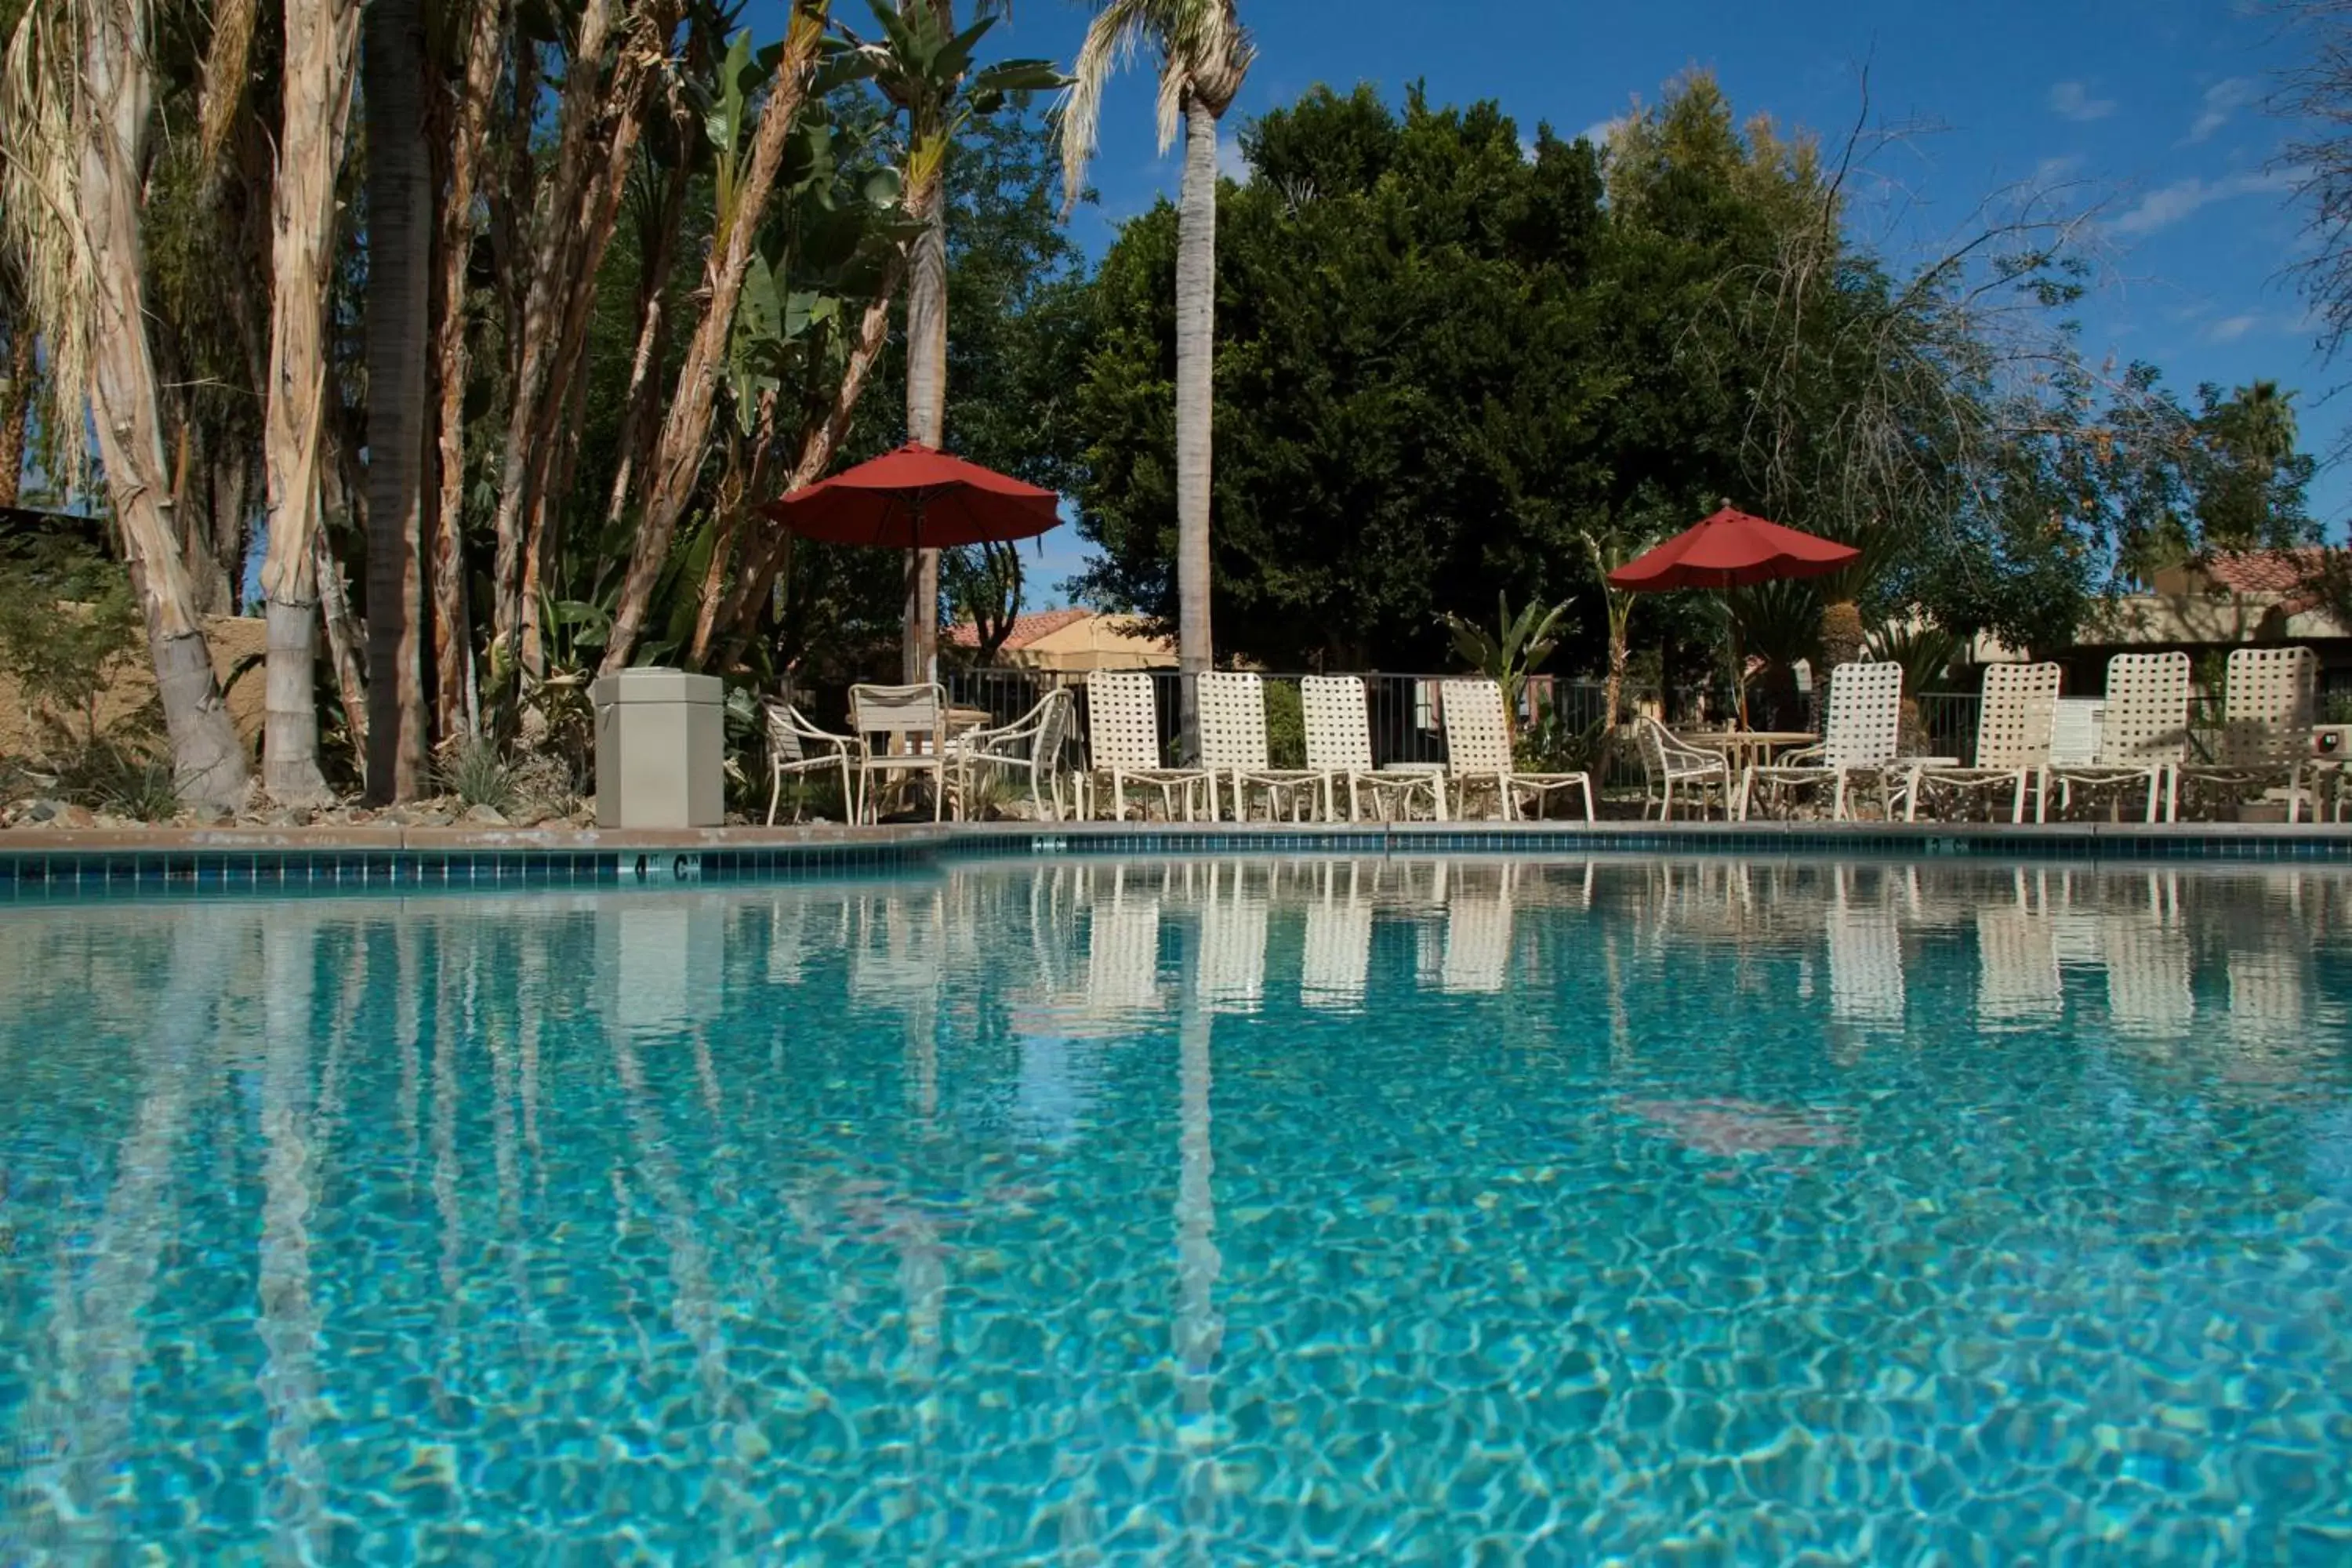 Swimming Pool in The Oasis Resort